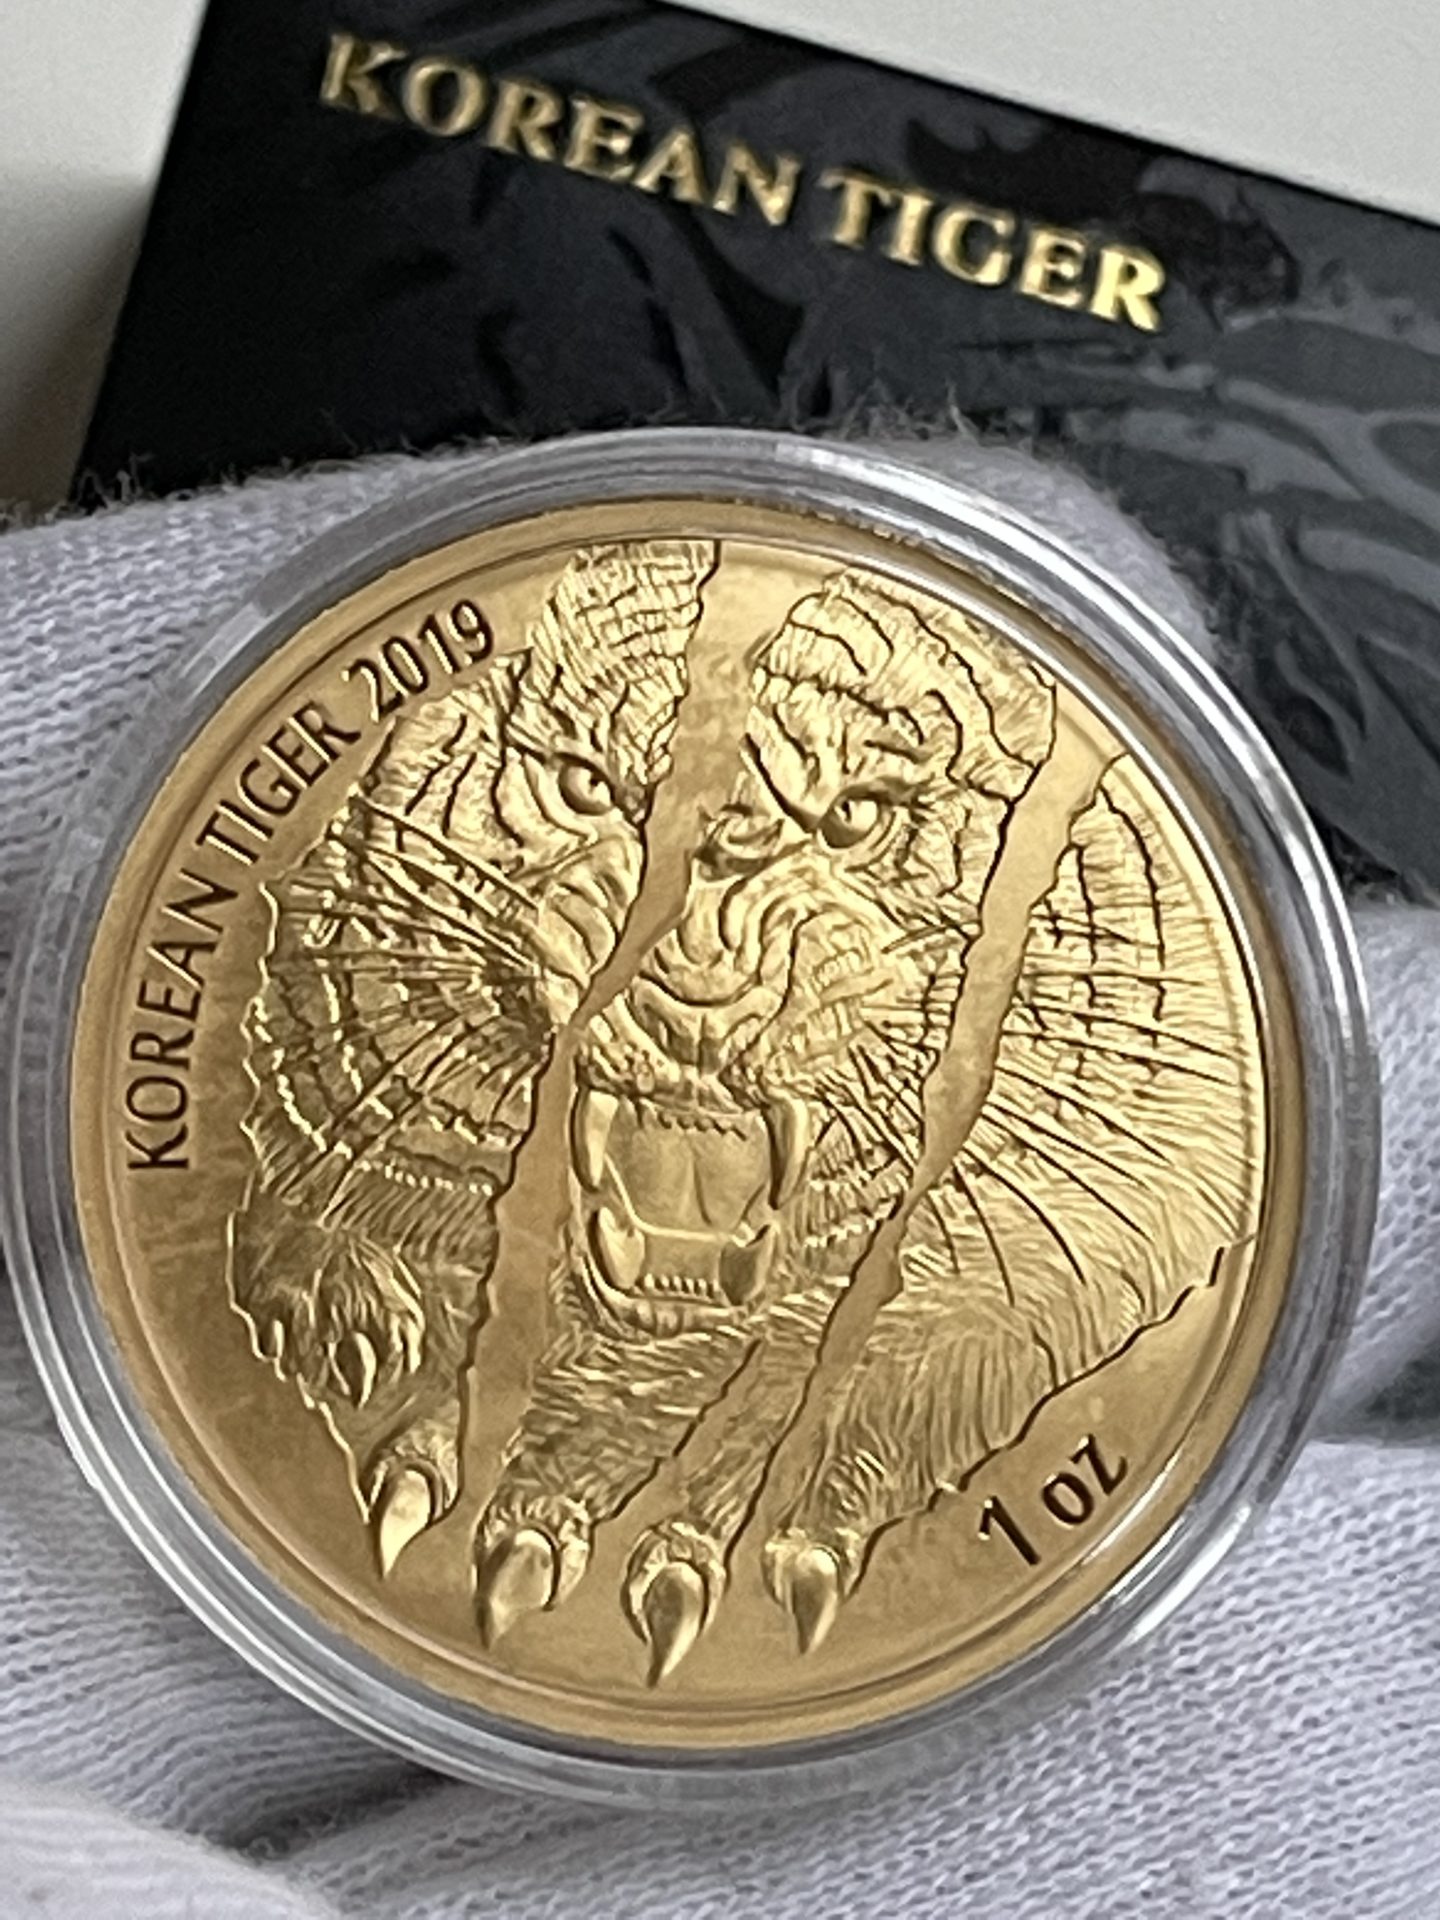 Südkorea – Koreanischer Tiger 2019 – 1 Oz Gold